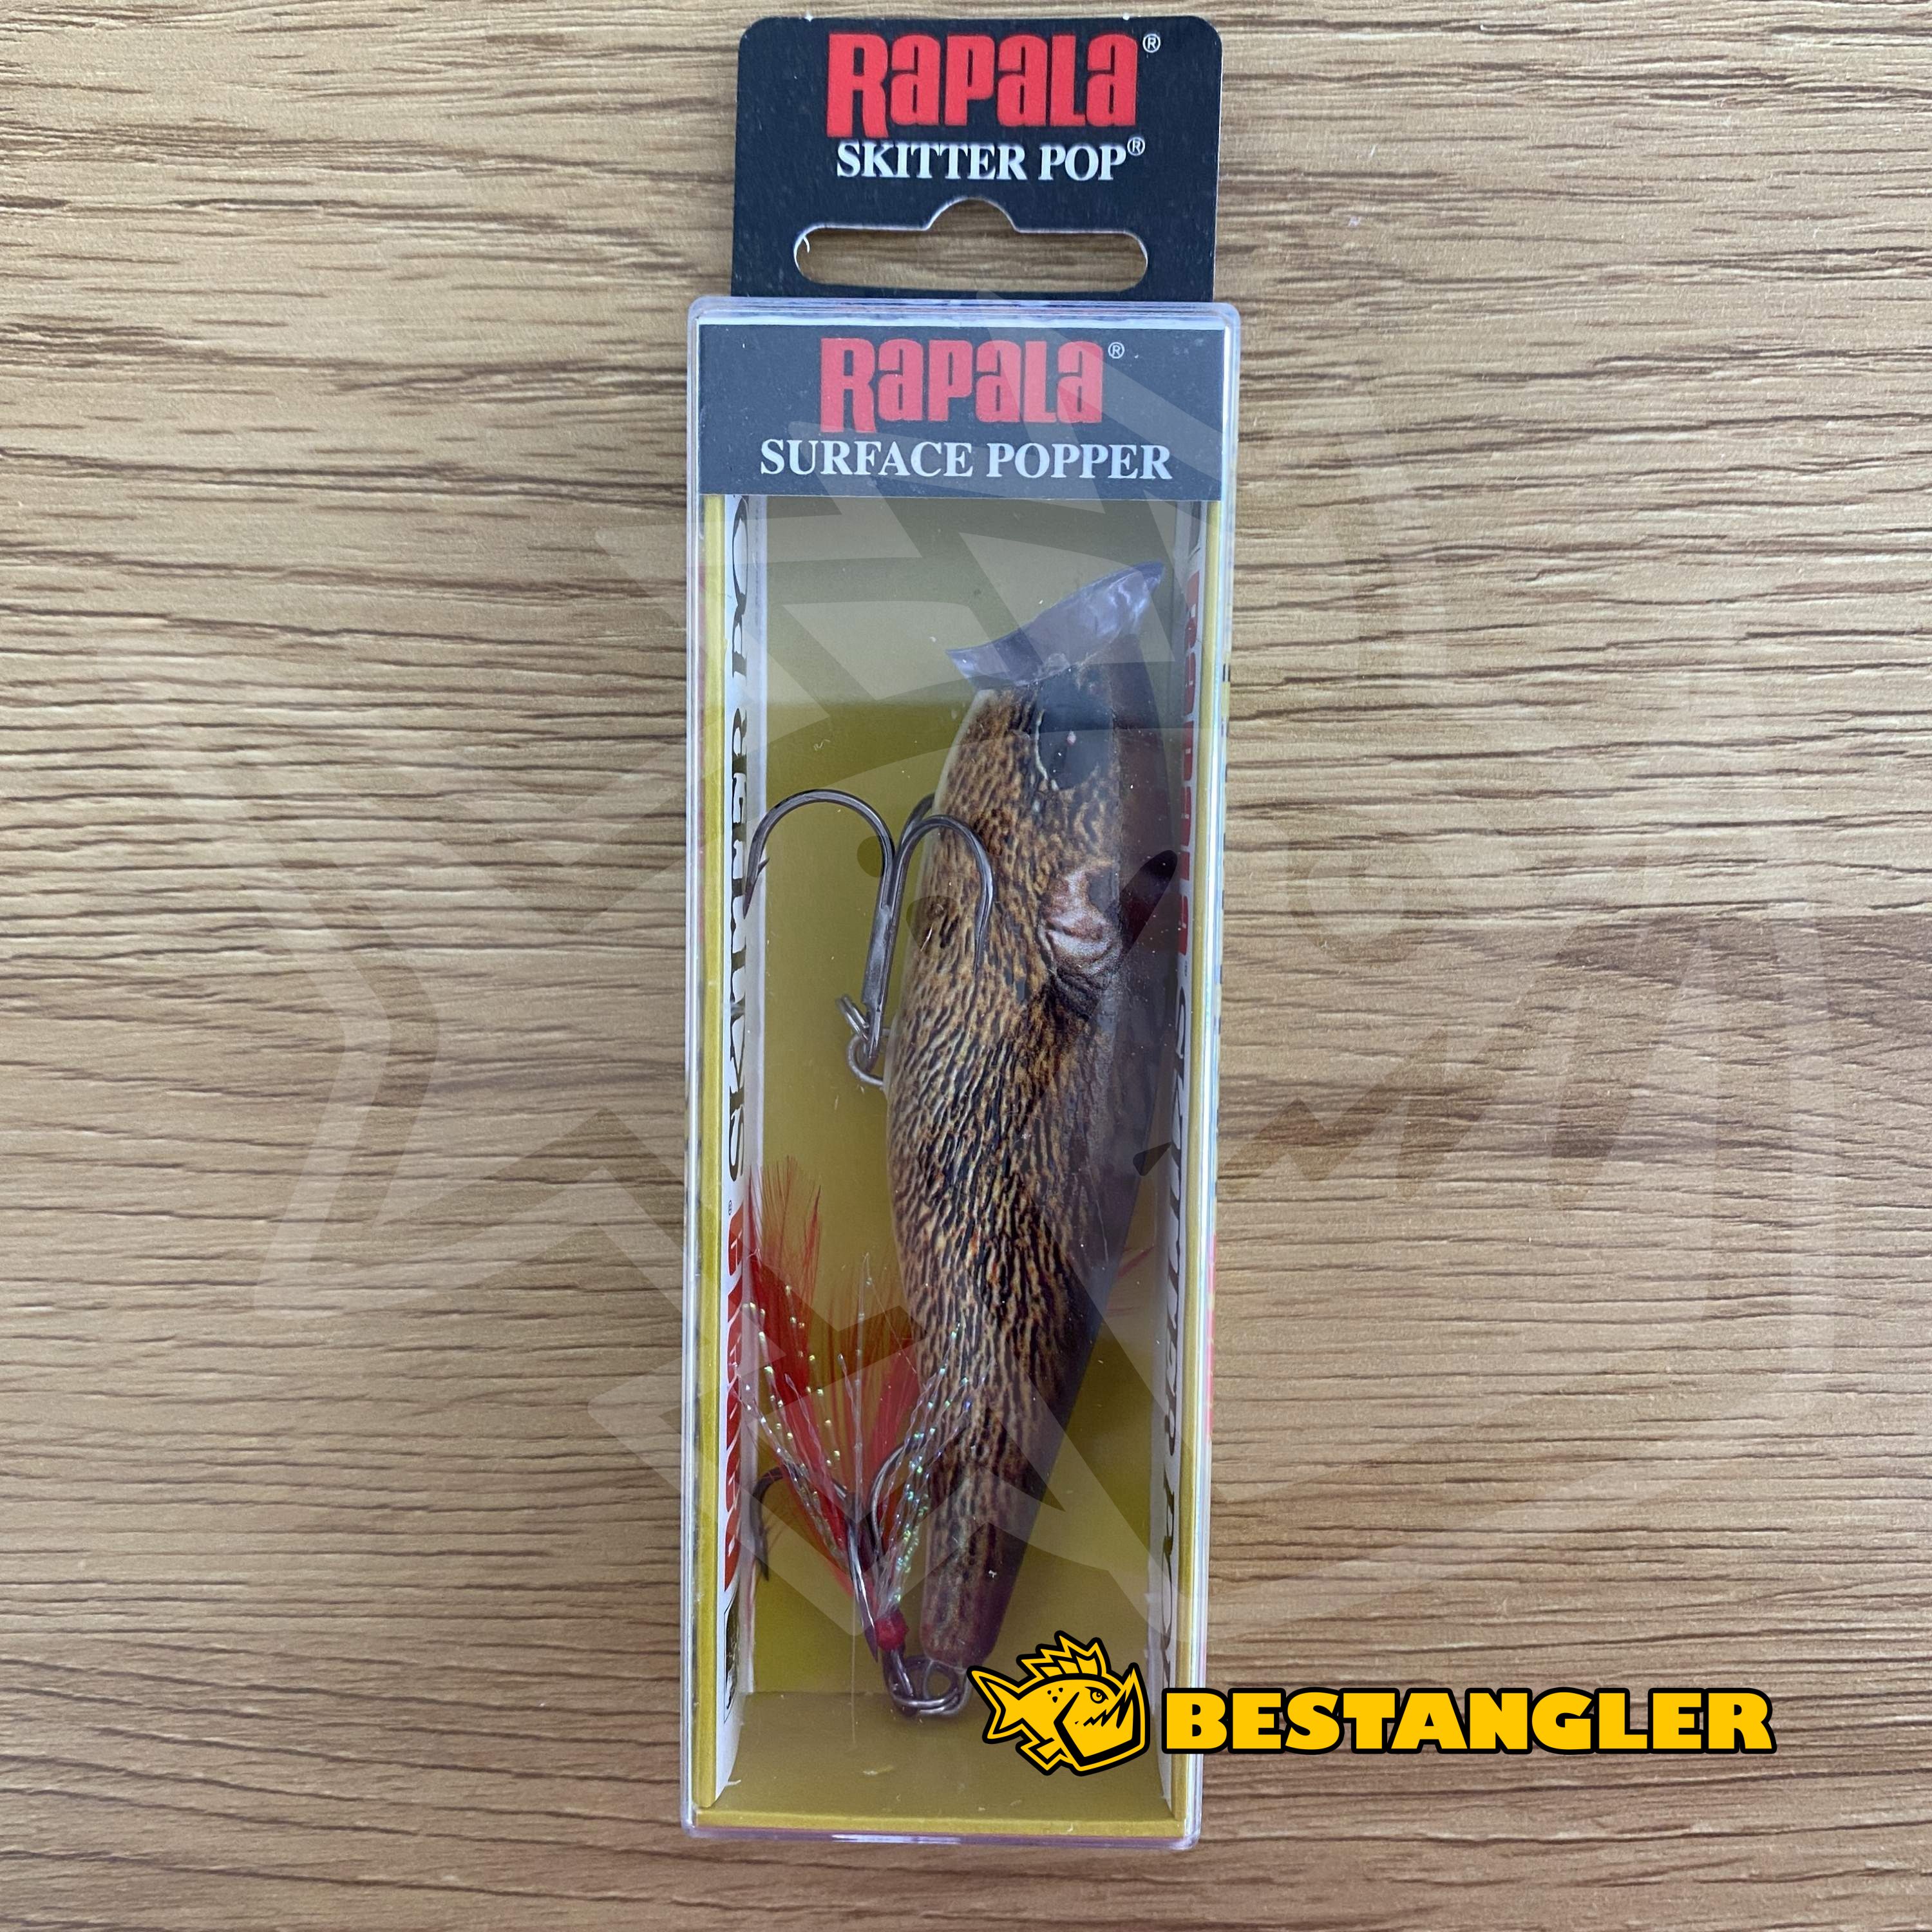 Rapala Skitter Pop 09 Live Field Mouse